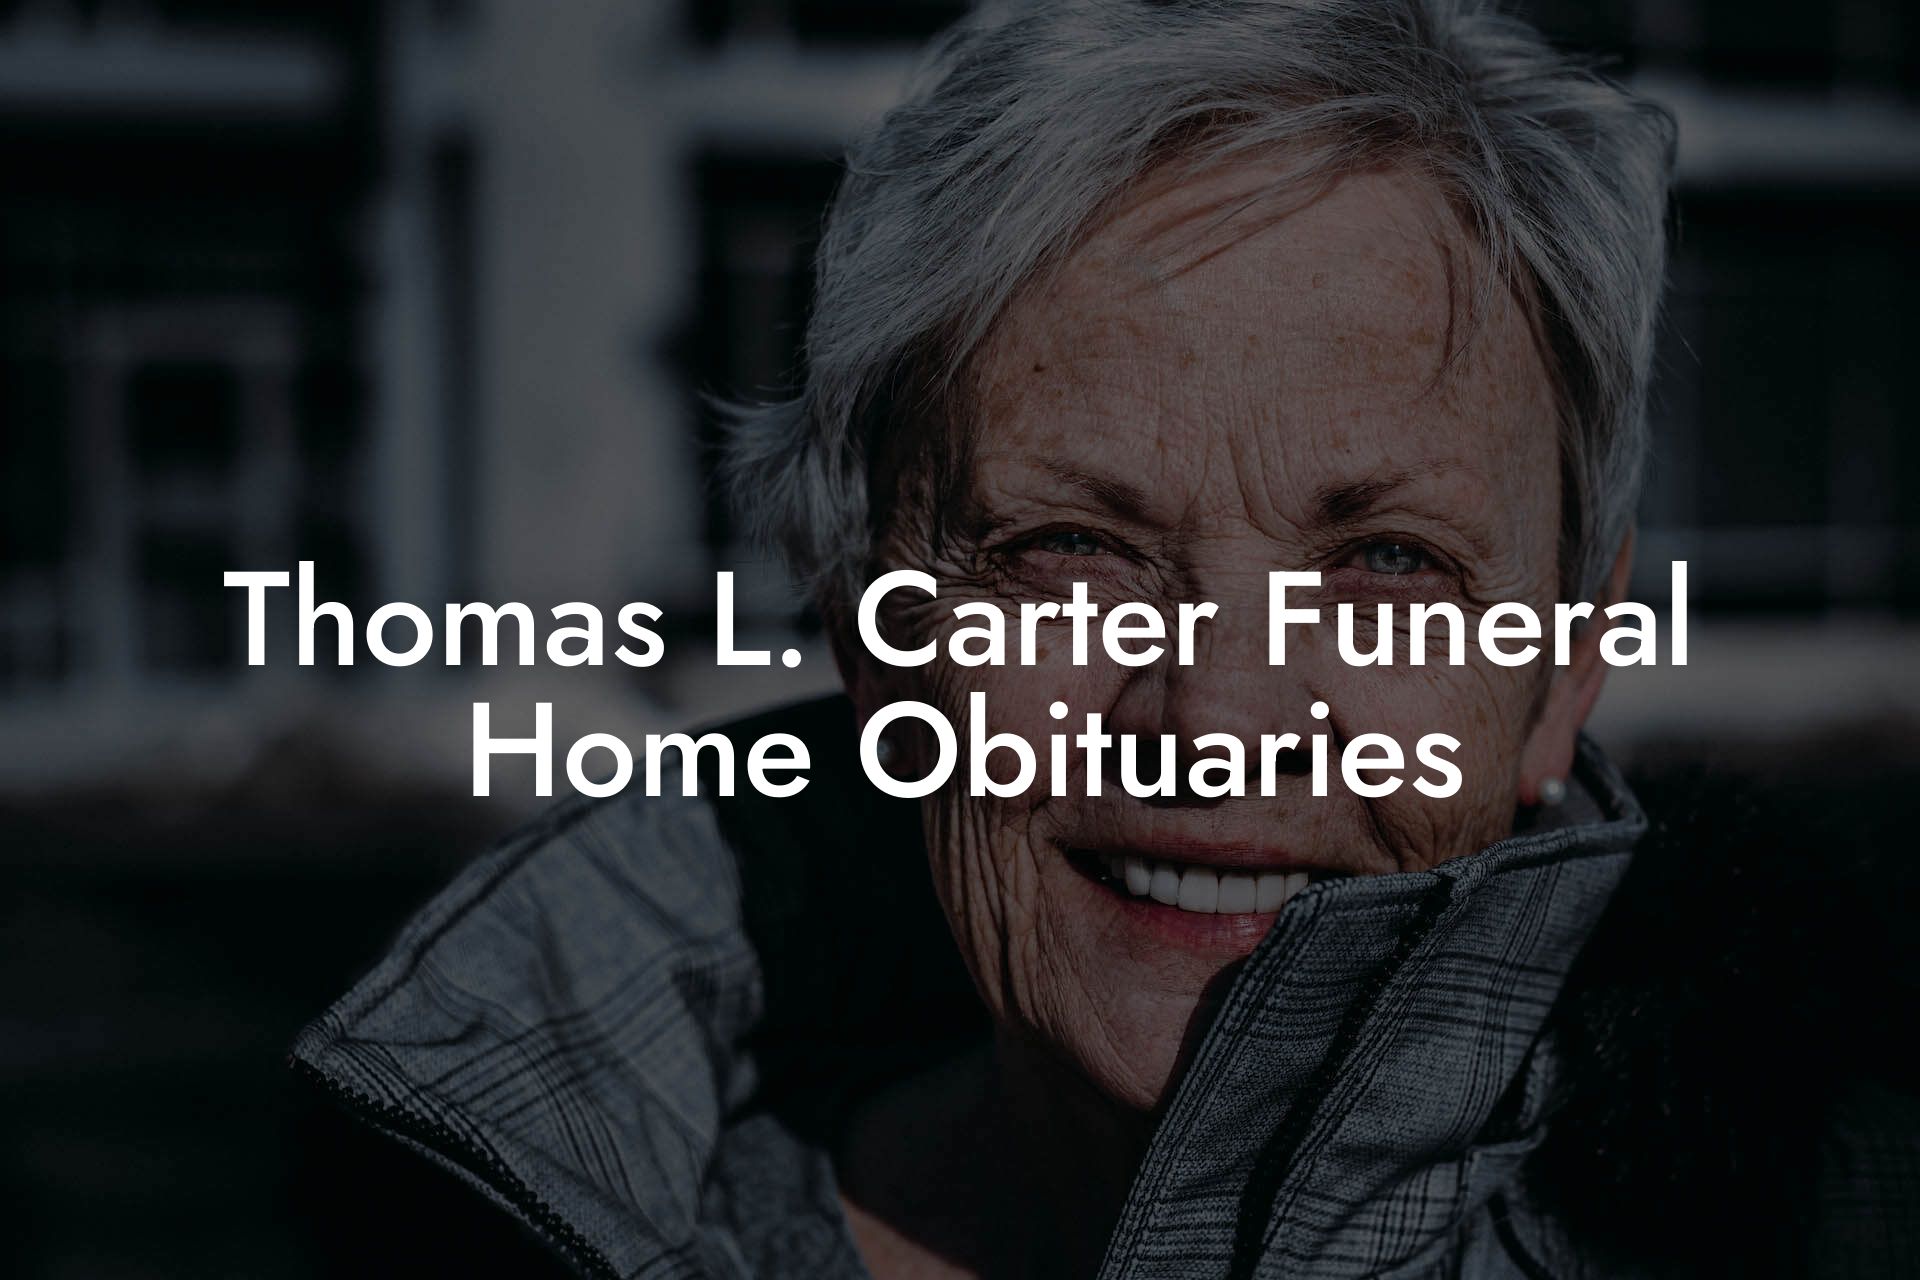 Thomas L. Carter Funeral Home Obituaries